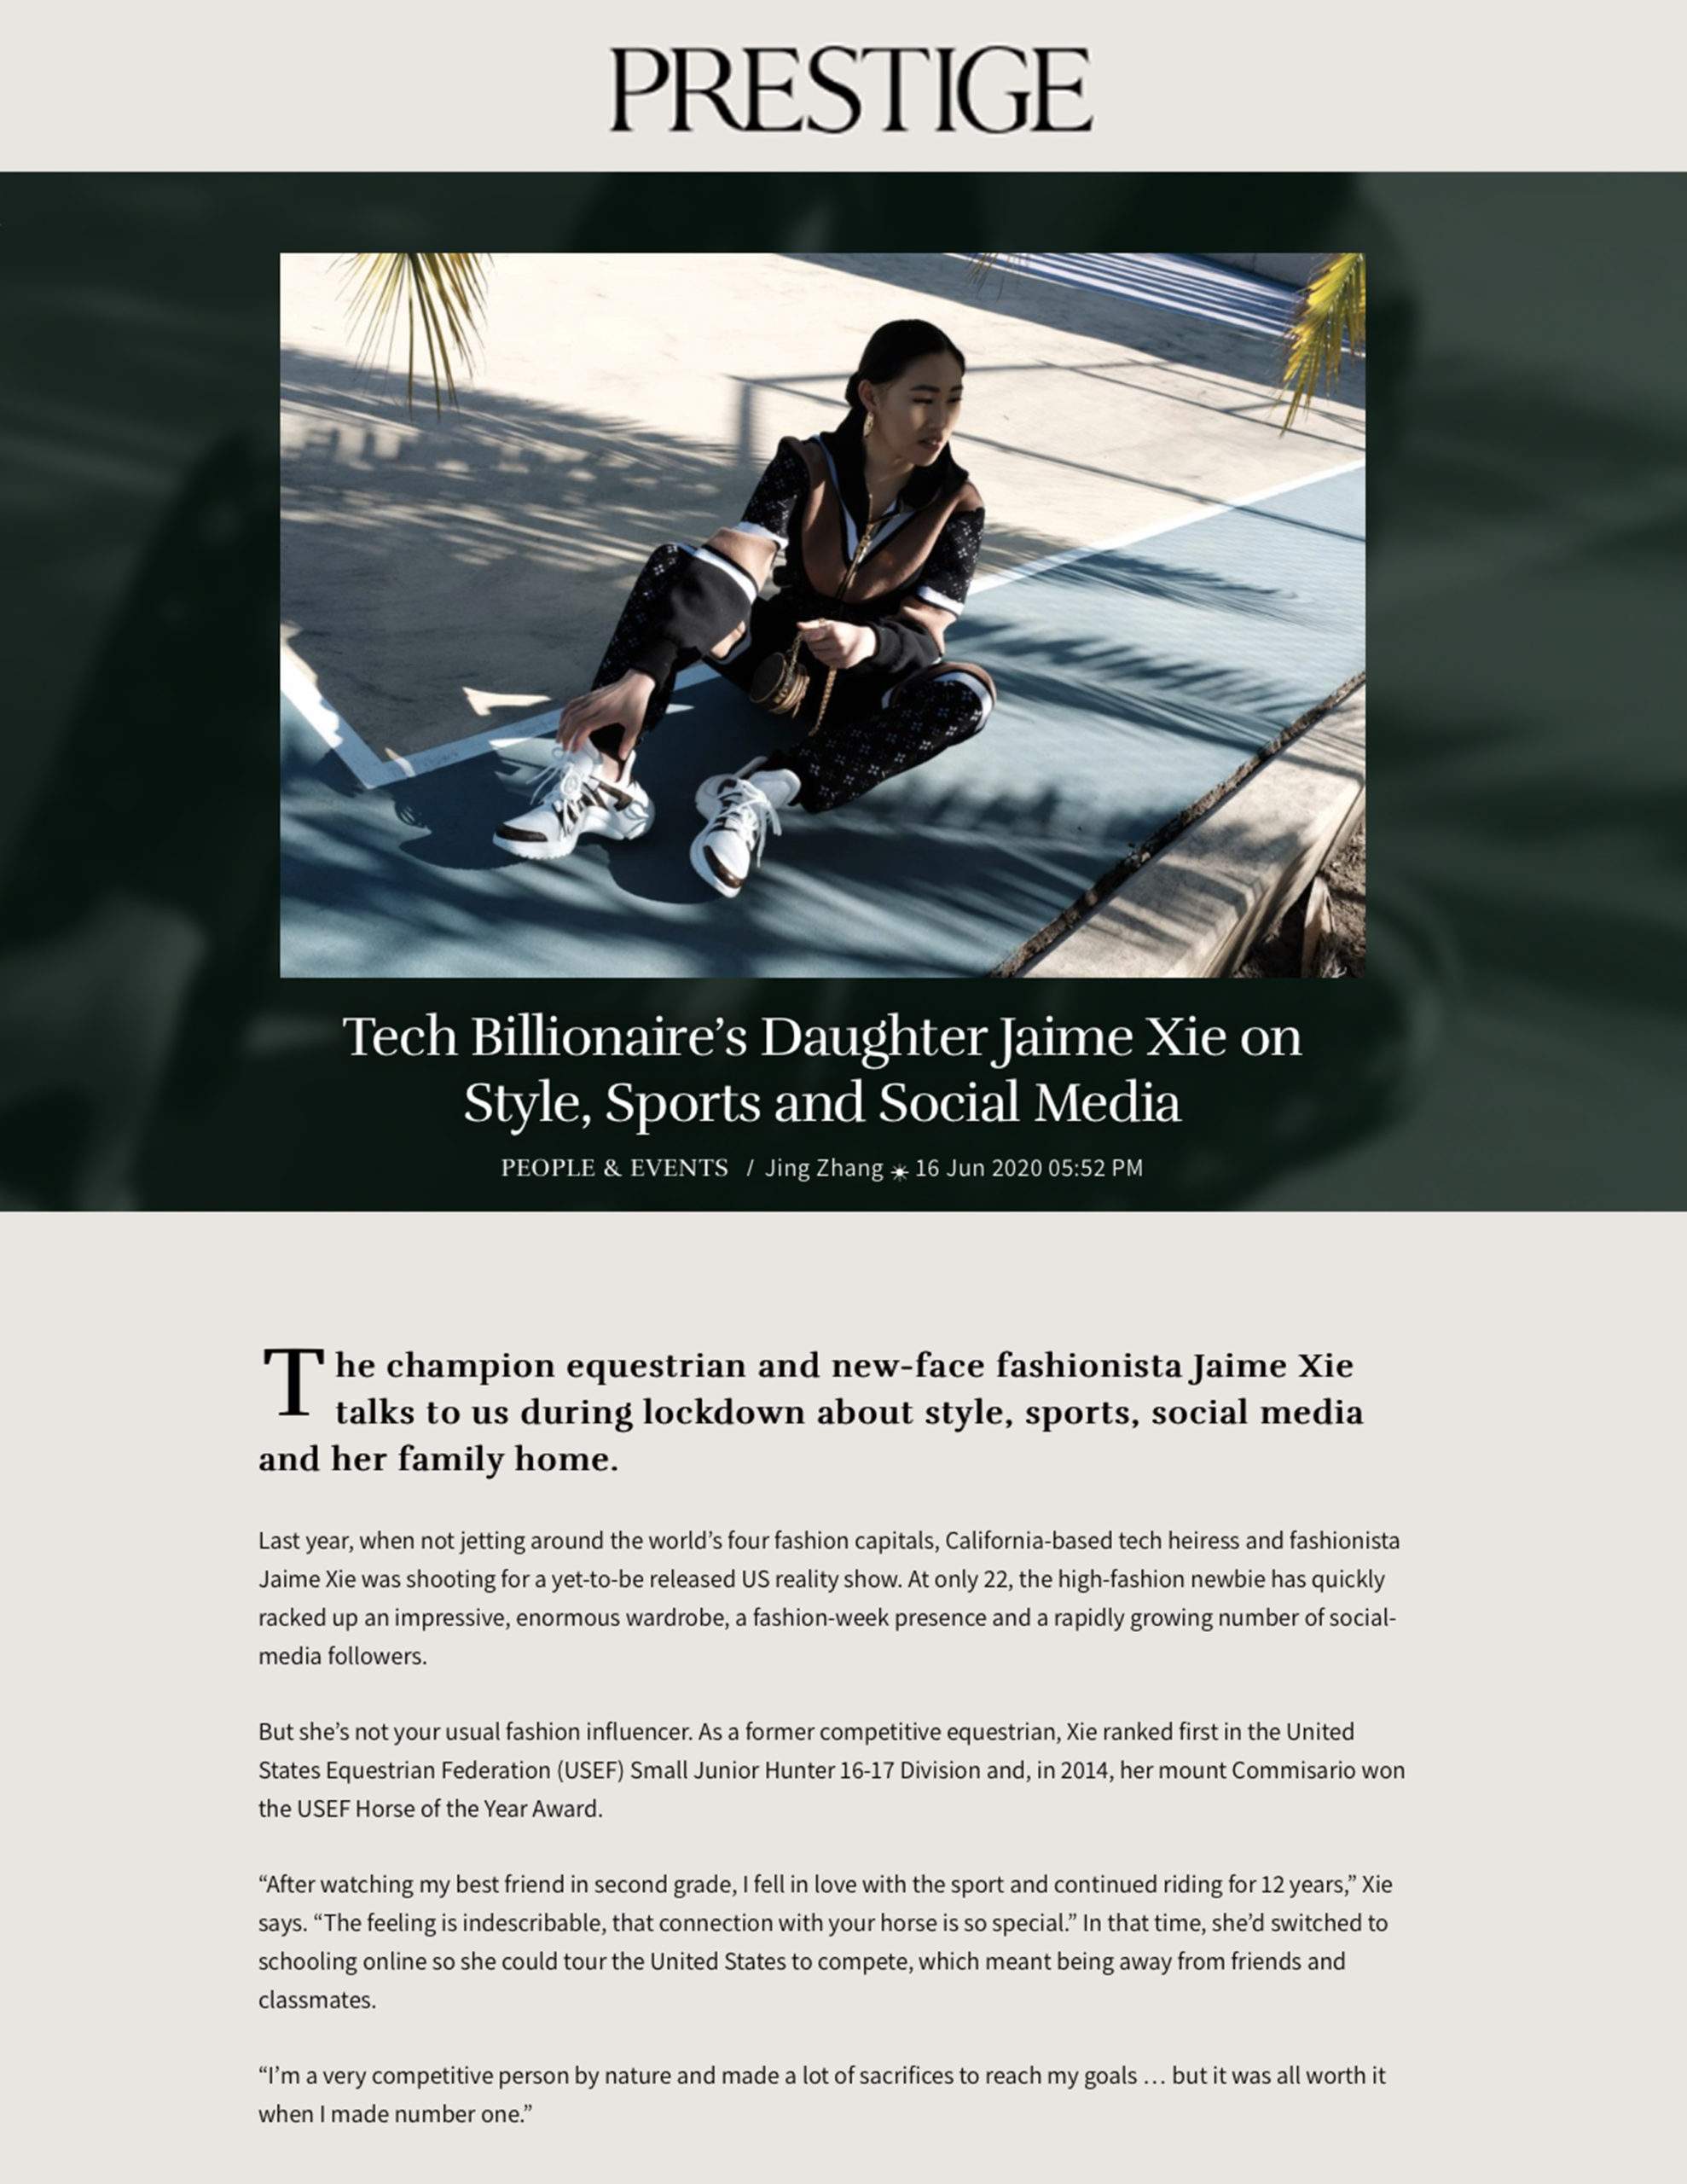 Prestige: Tech Billionaire’s Daughter Jaime Xie on Style, Sports and Social Media